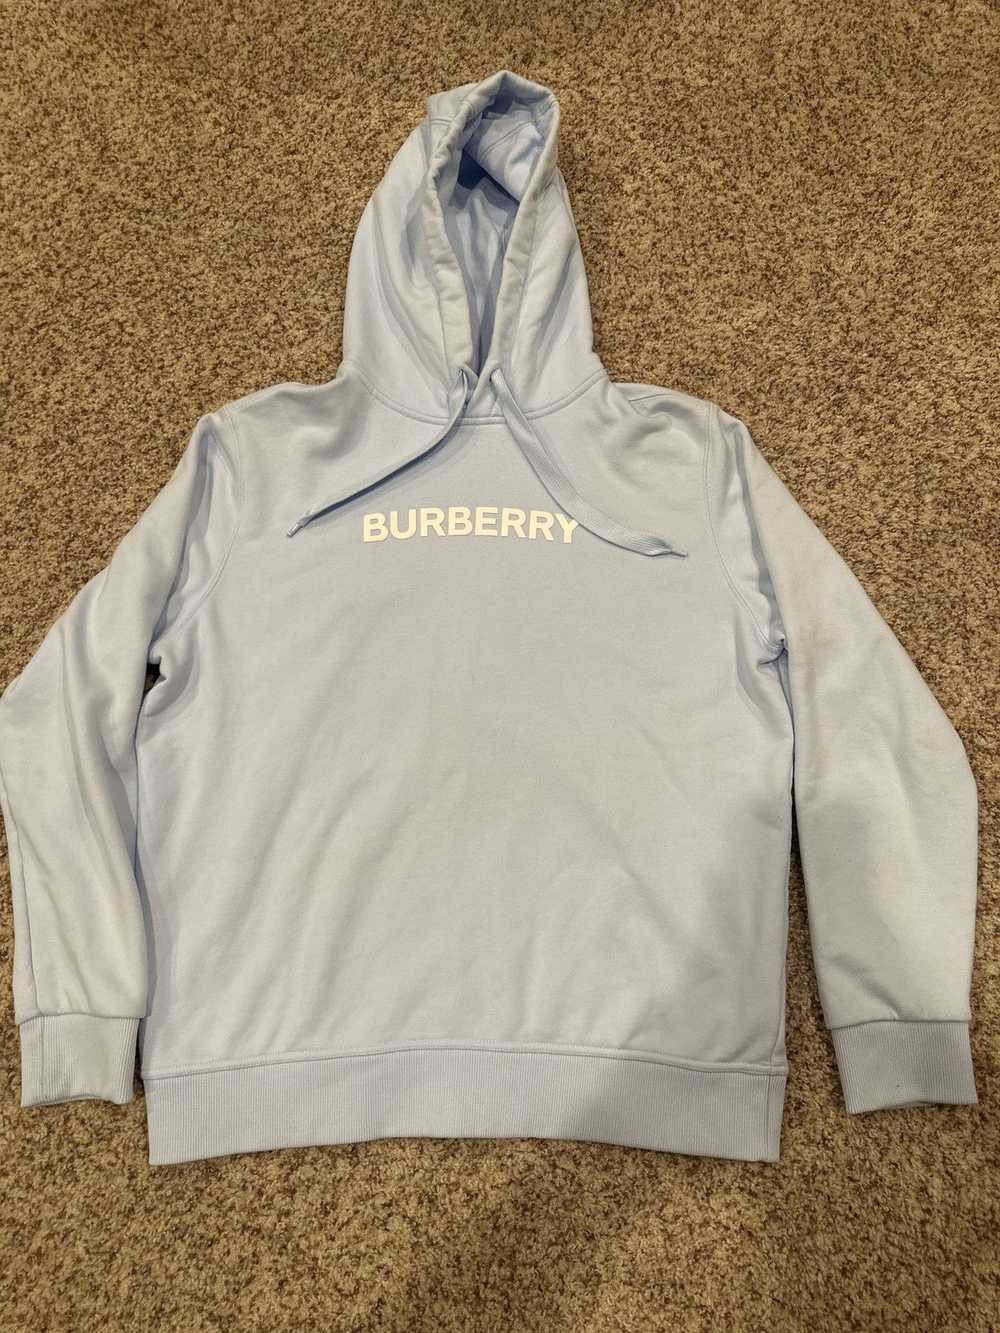 Burberry Burberry Hoodie - image 1